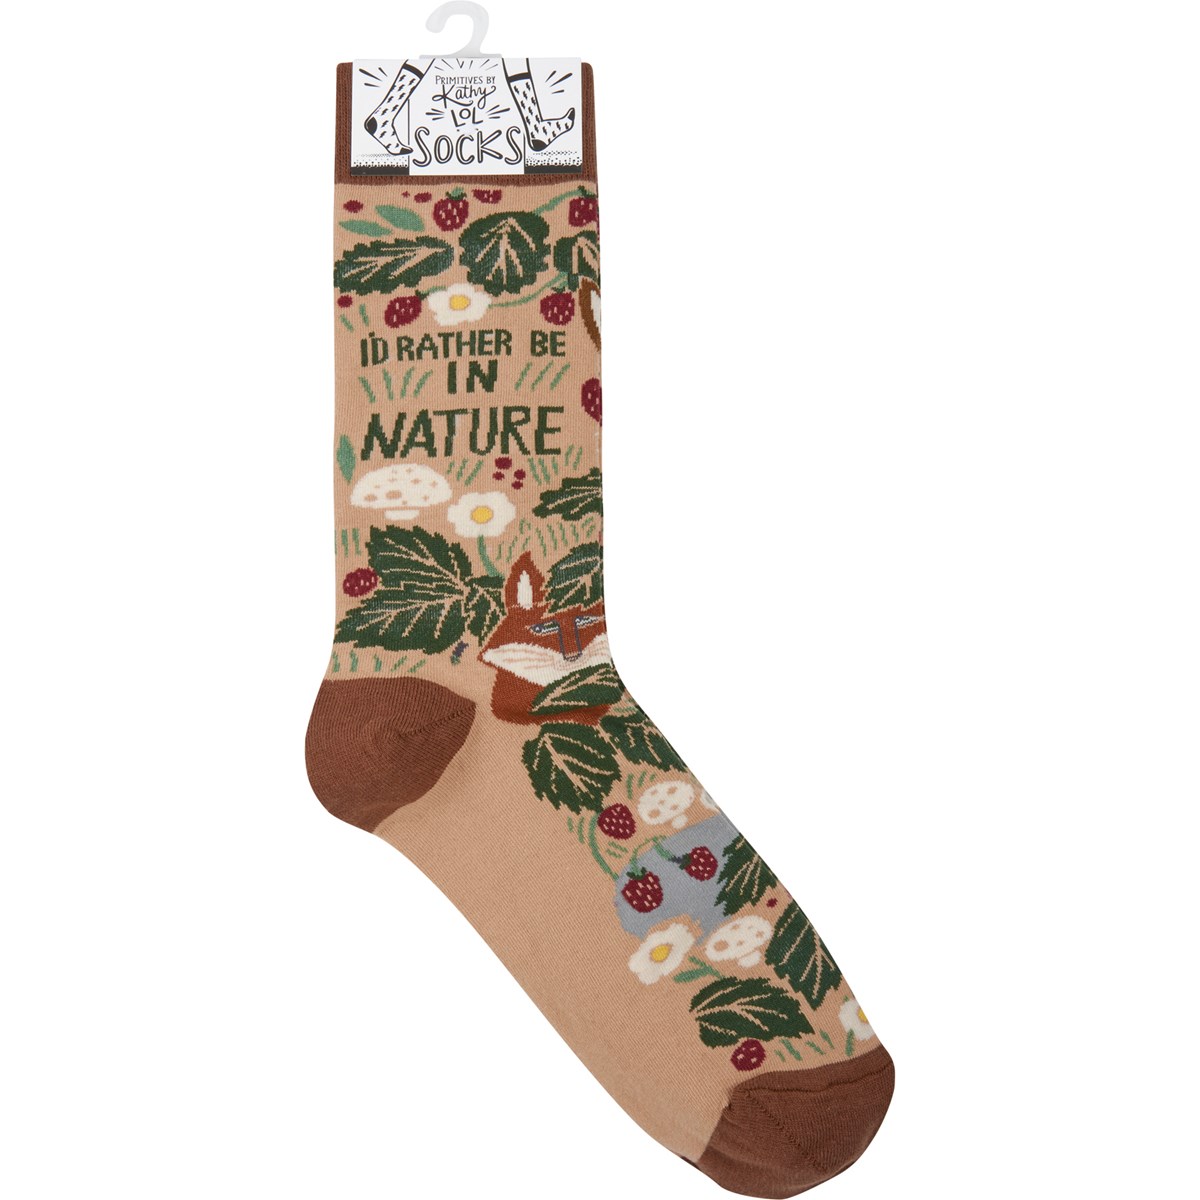 I'd Rather Be In Nature Socks - Cotton, Nylon, Spandex